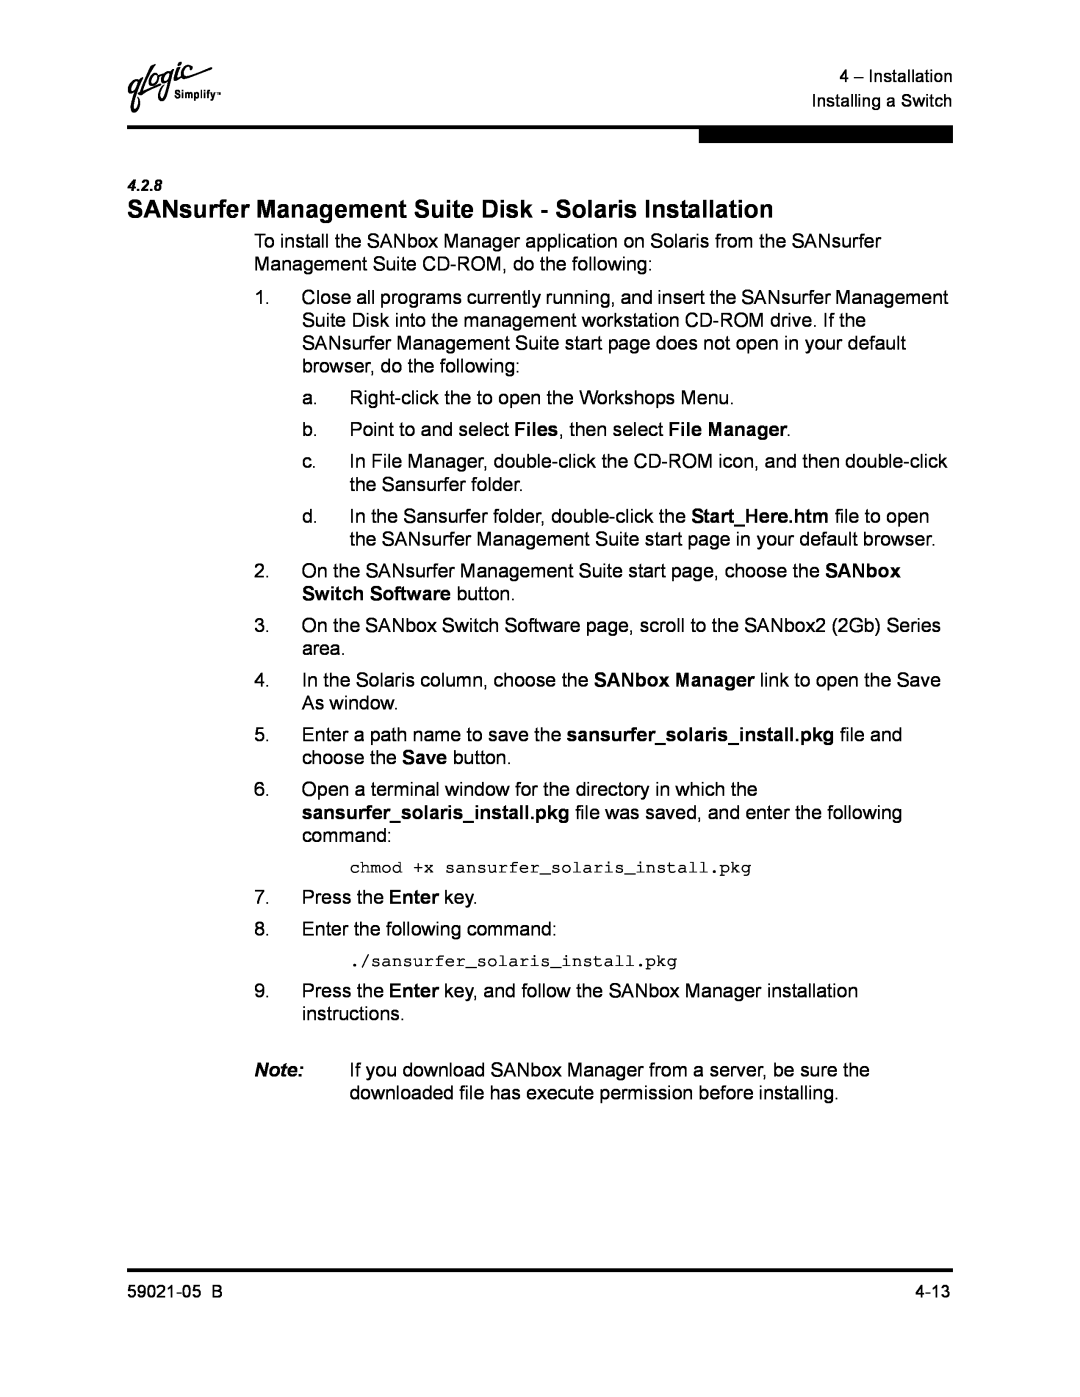 Q-Logic 59021-05 B manual SANsurfer Management Suite Disk - Solaris Installation, chmod +x sansurfersolarisinstall.pkg 